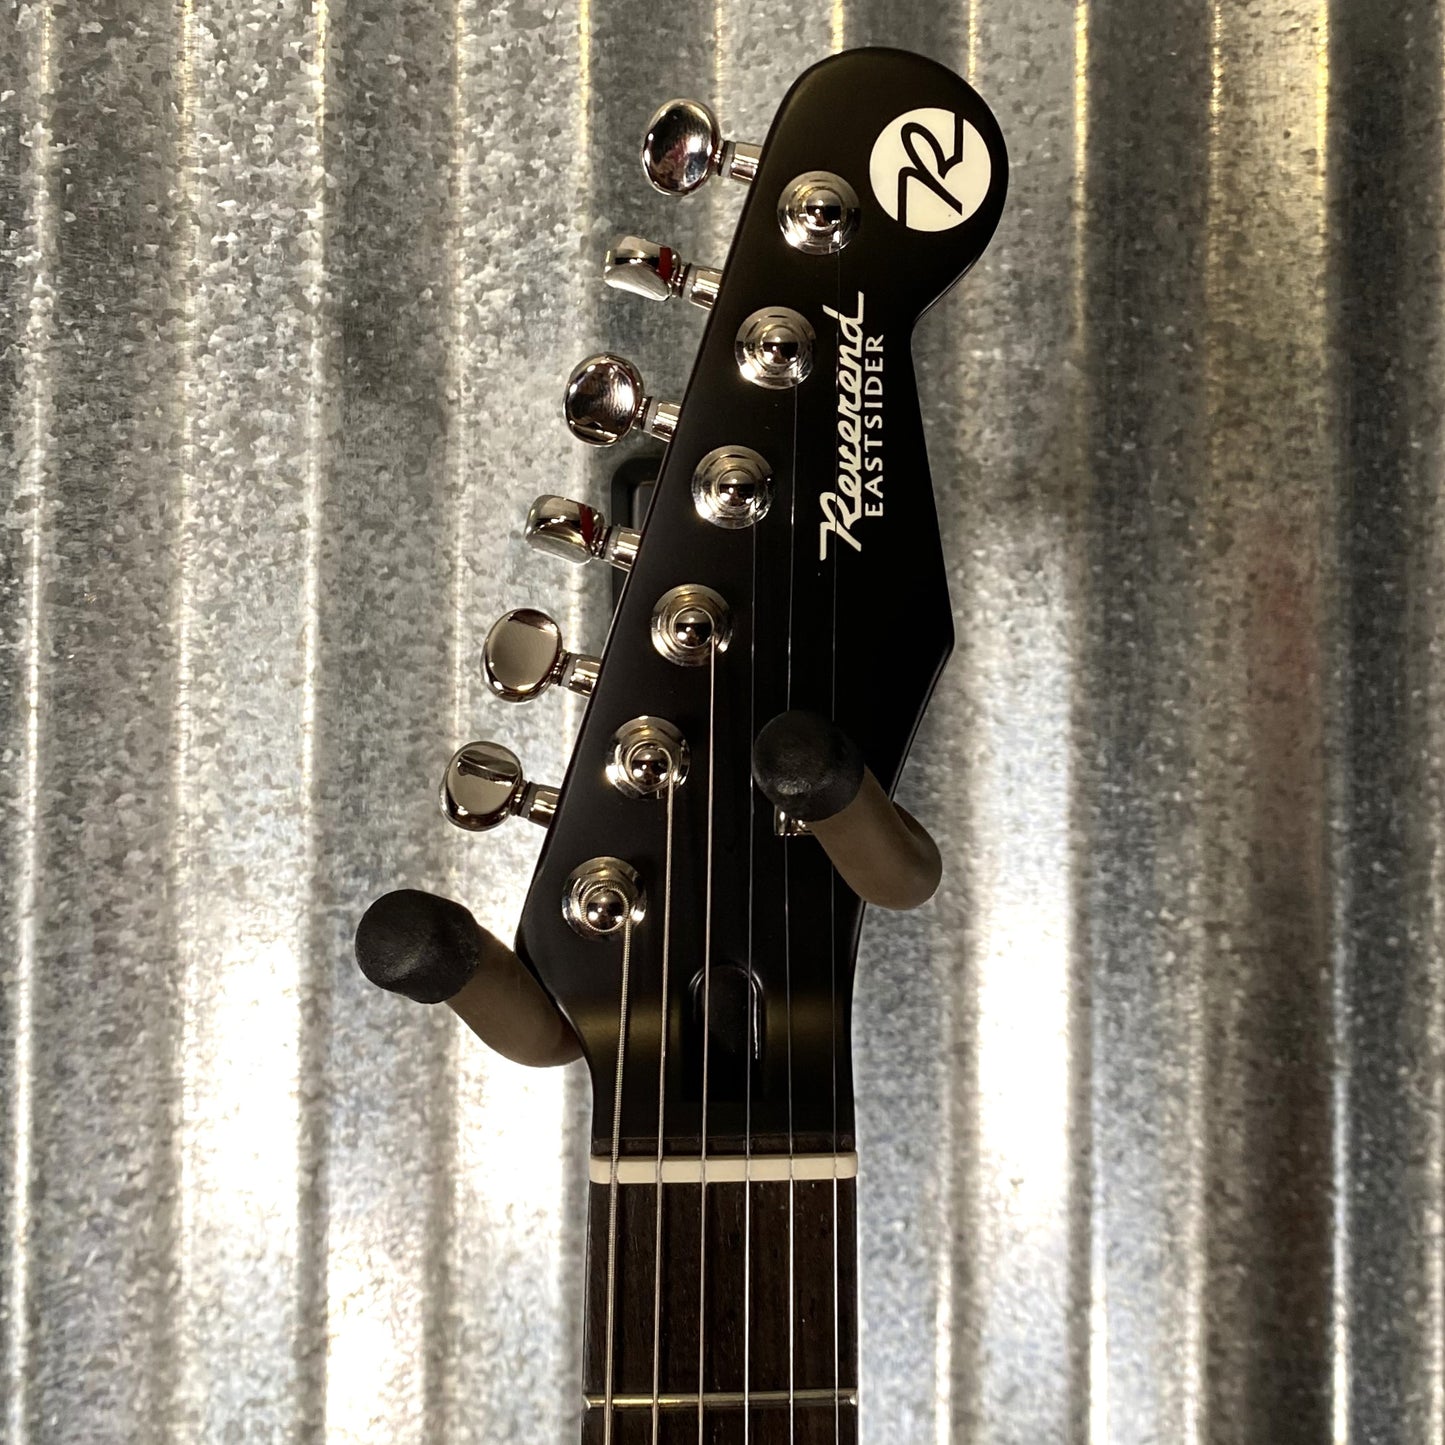 Reverend Guitars Pete Anderson Eastsider Custom Classic Cherry Set Neck Guitar #61357